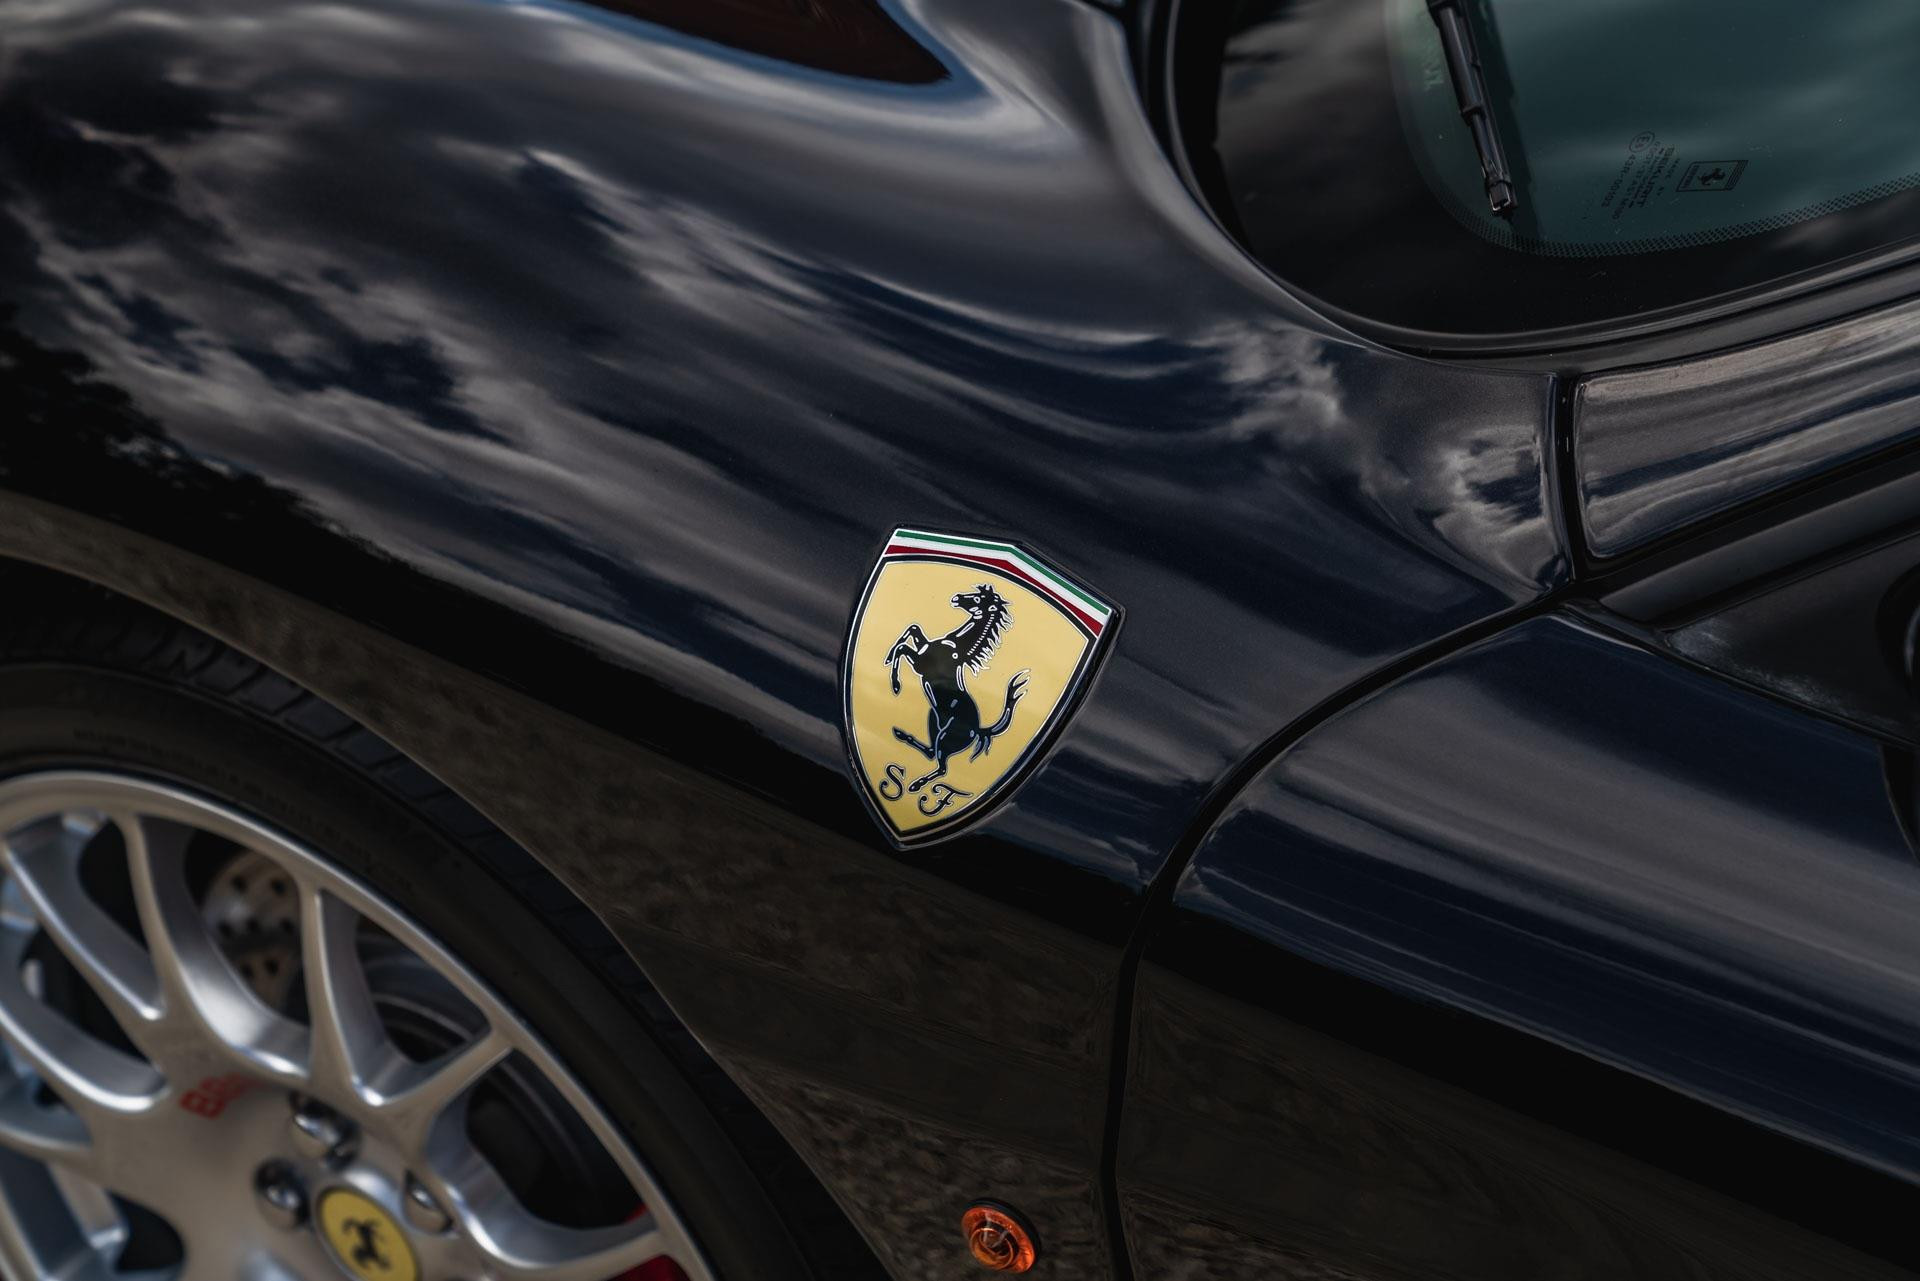 Chi tiết siêu xe Ferrari 360 Spider của David Beckham - 19